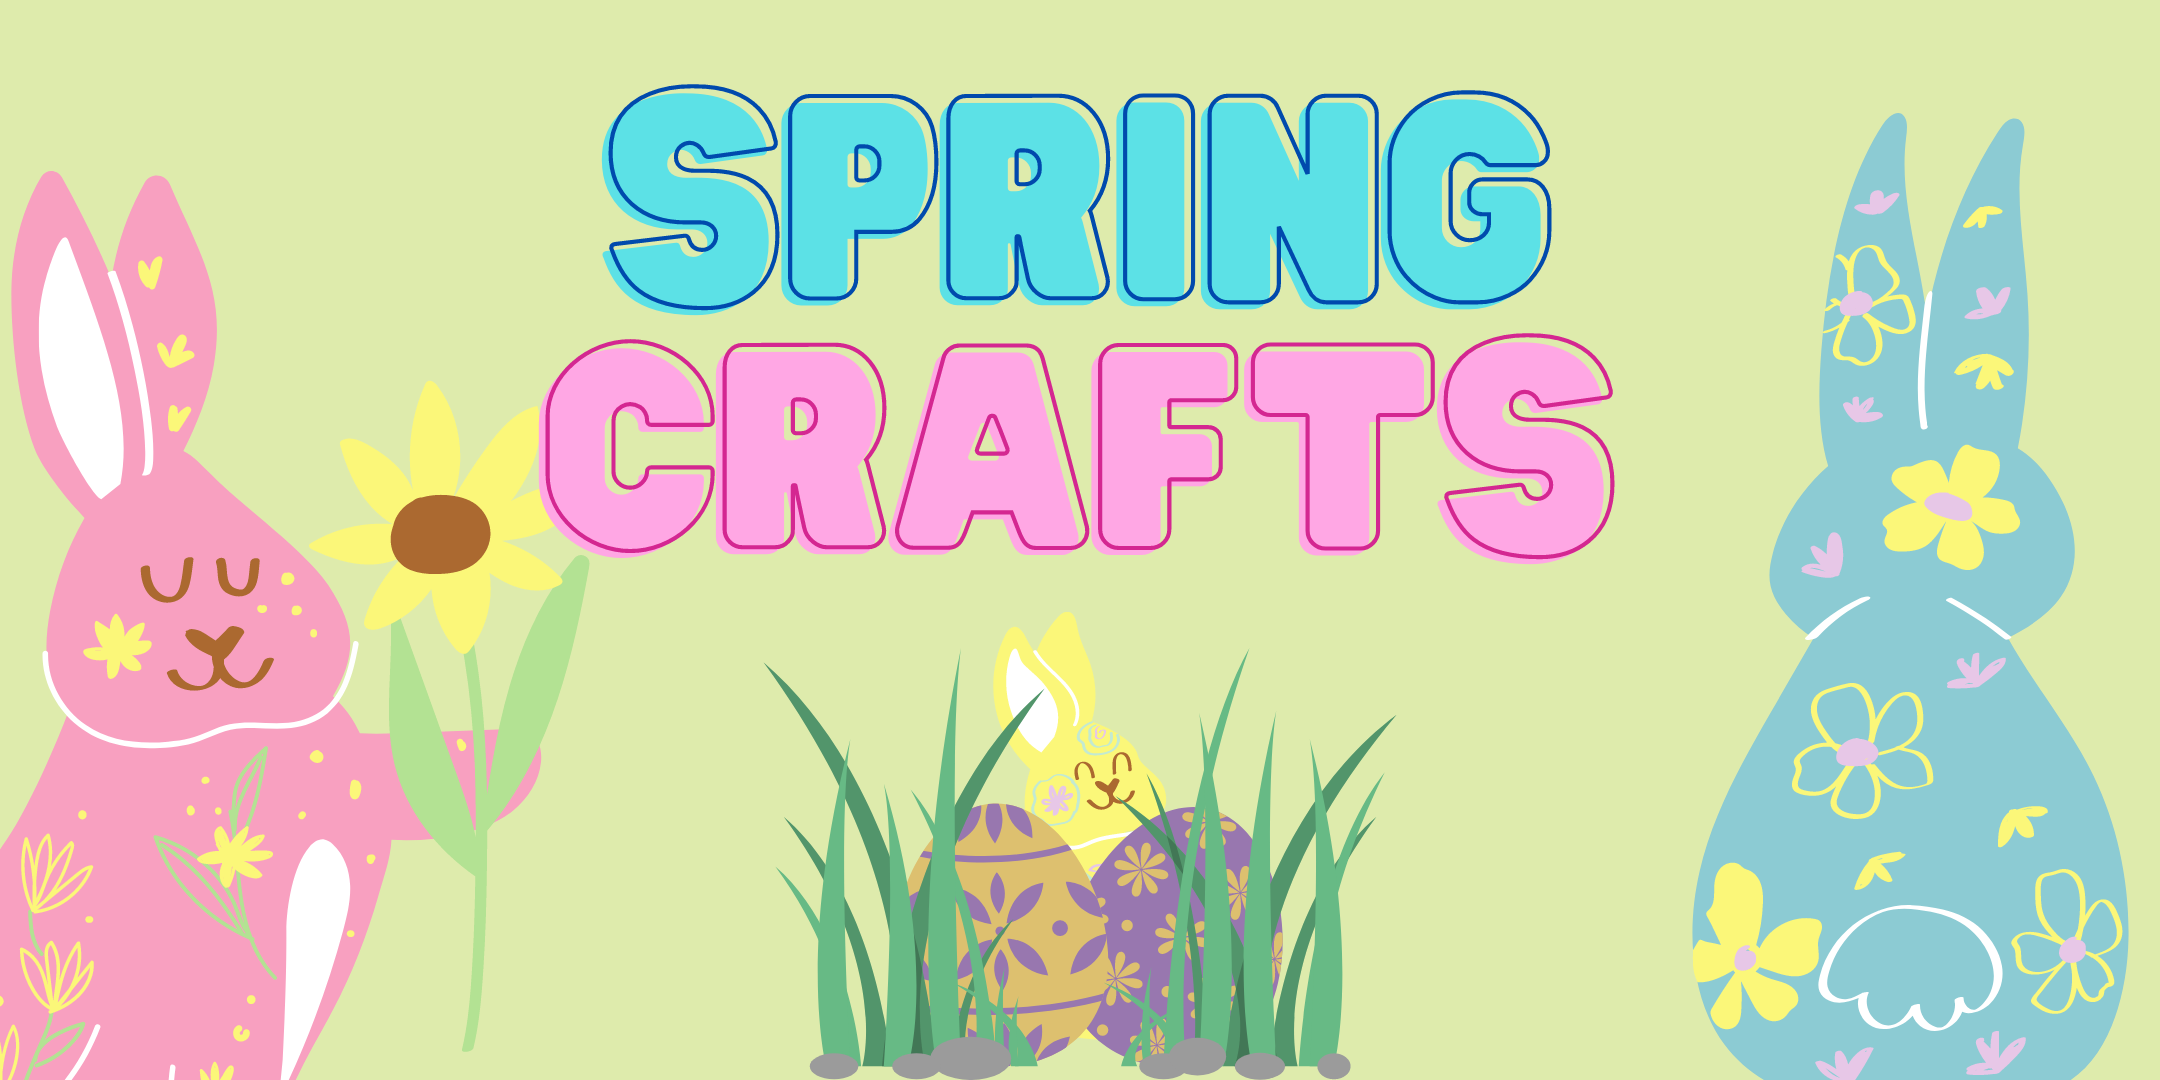 Spring crafts